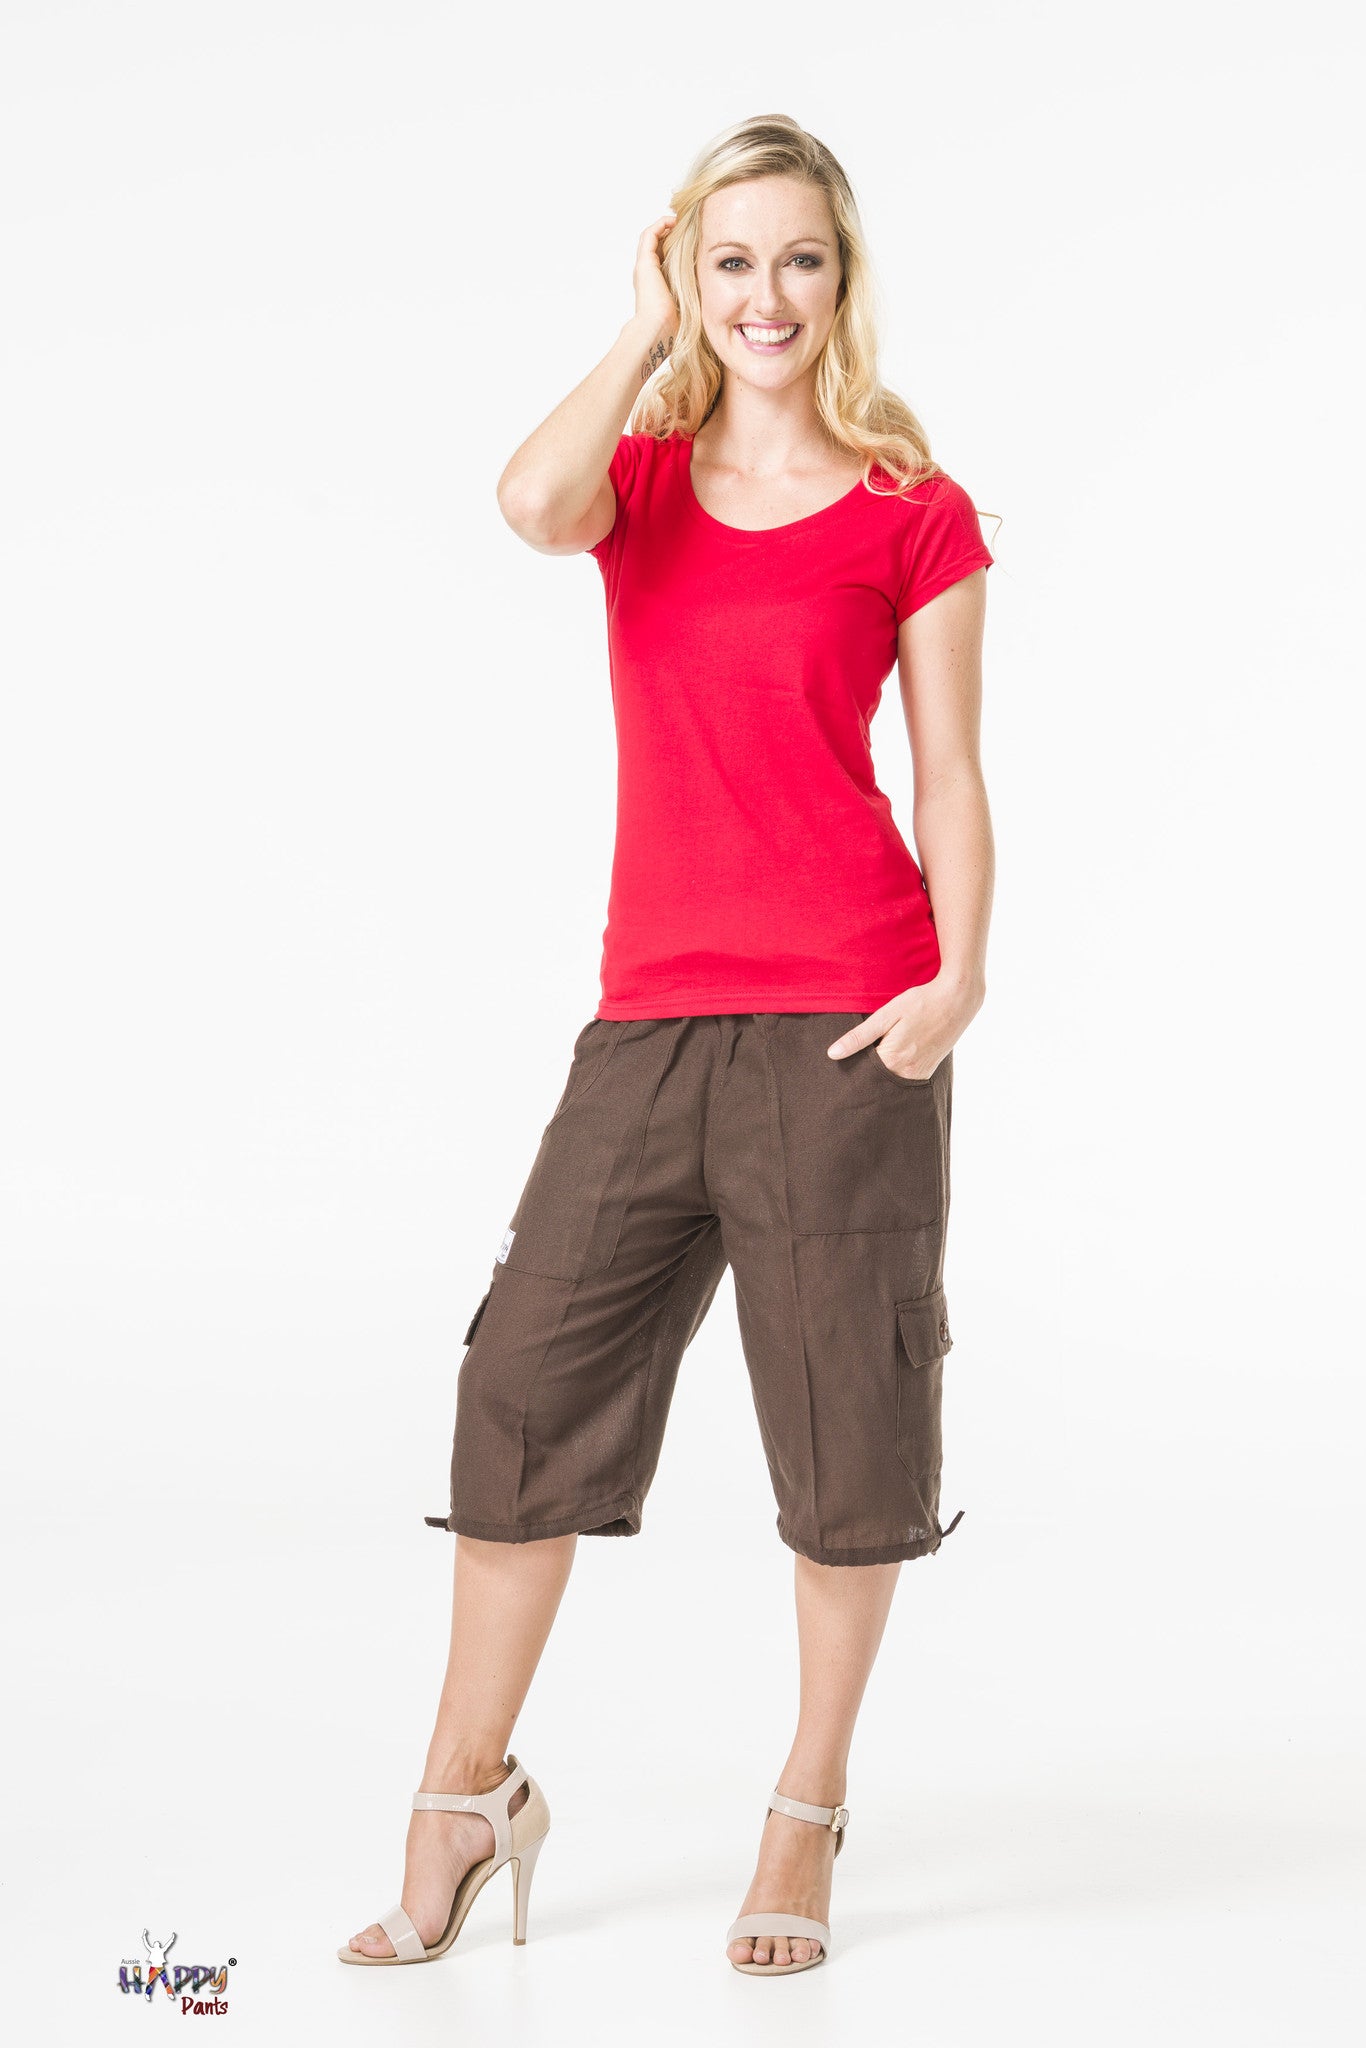 Happy Pants ® Women's Clothing